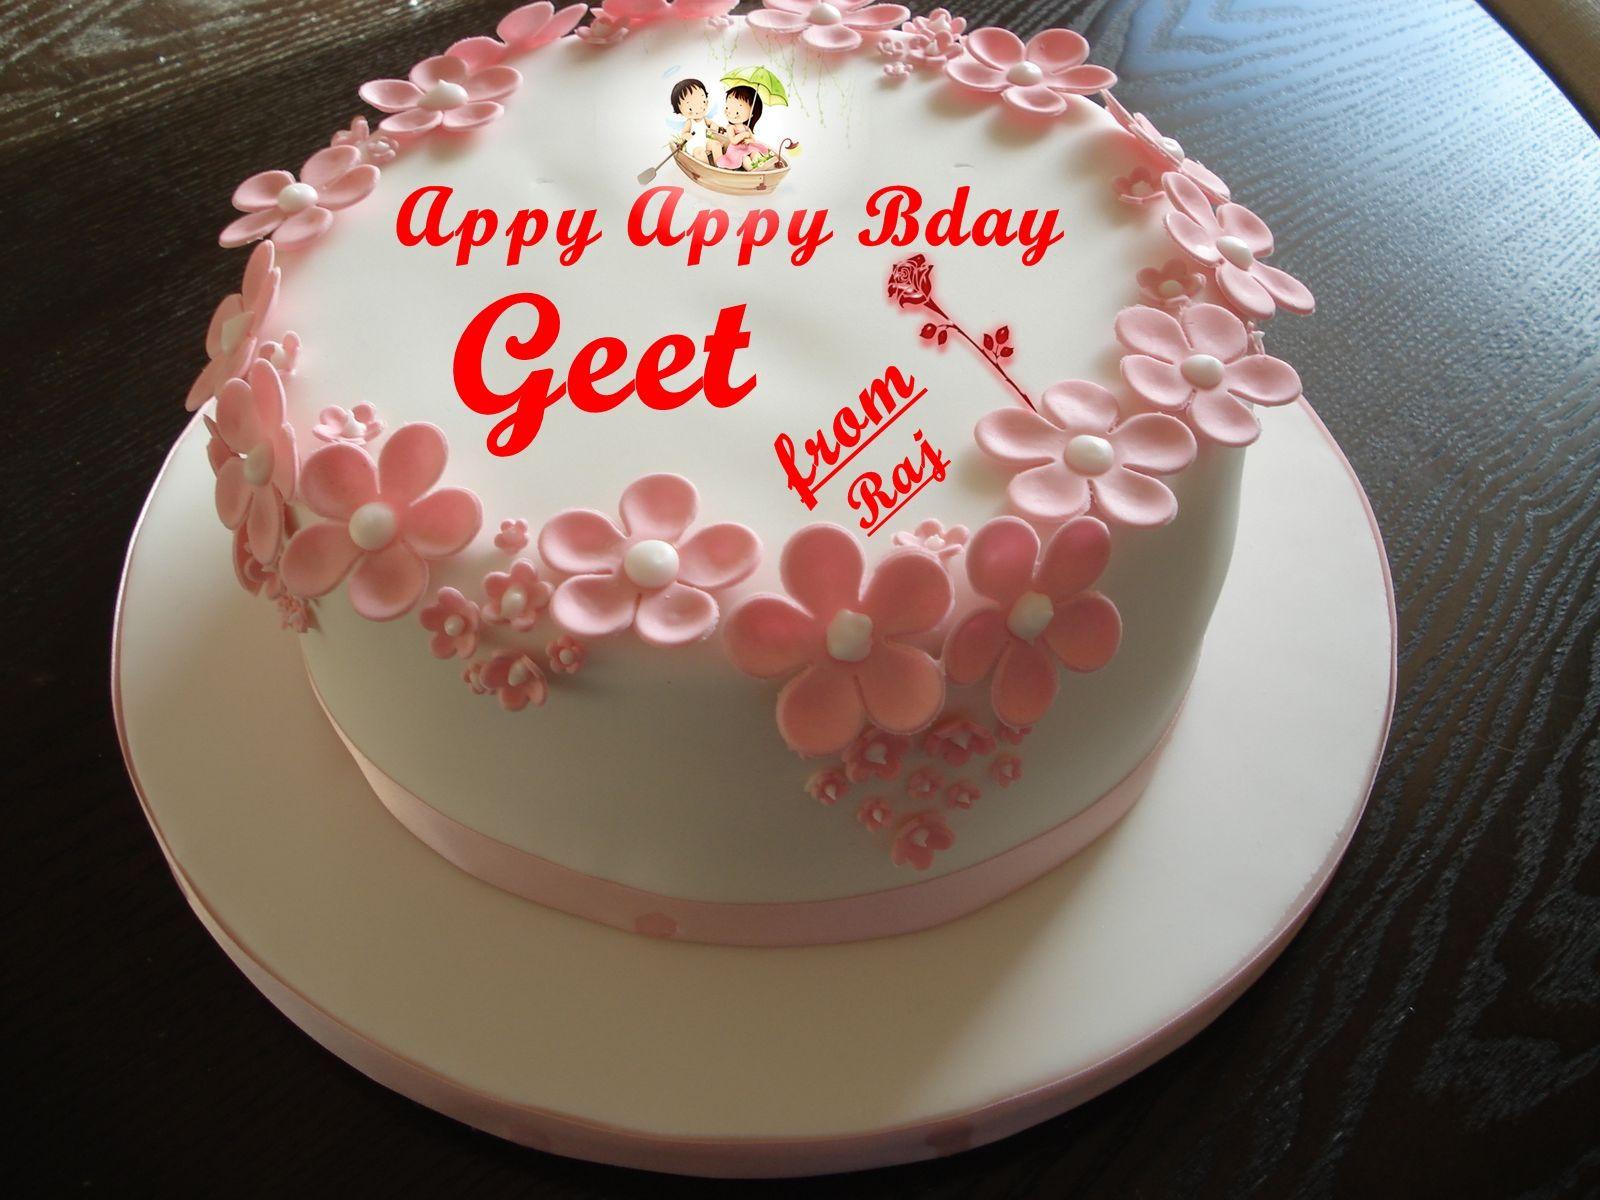 HAPPY BIRTHDAY GEET: appy appy bday geet